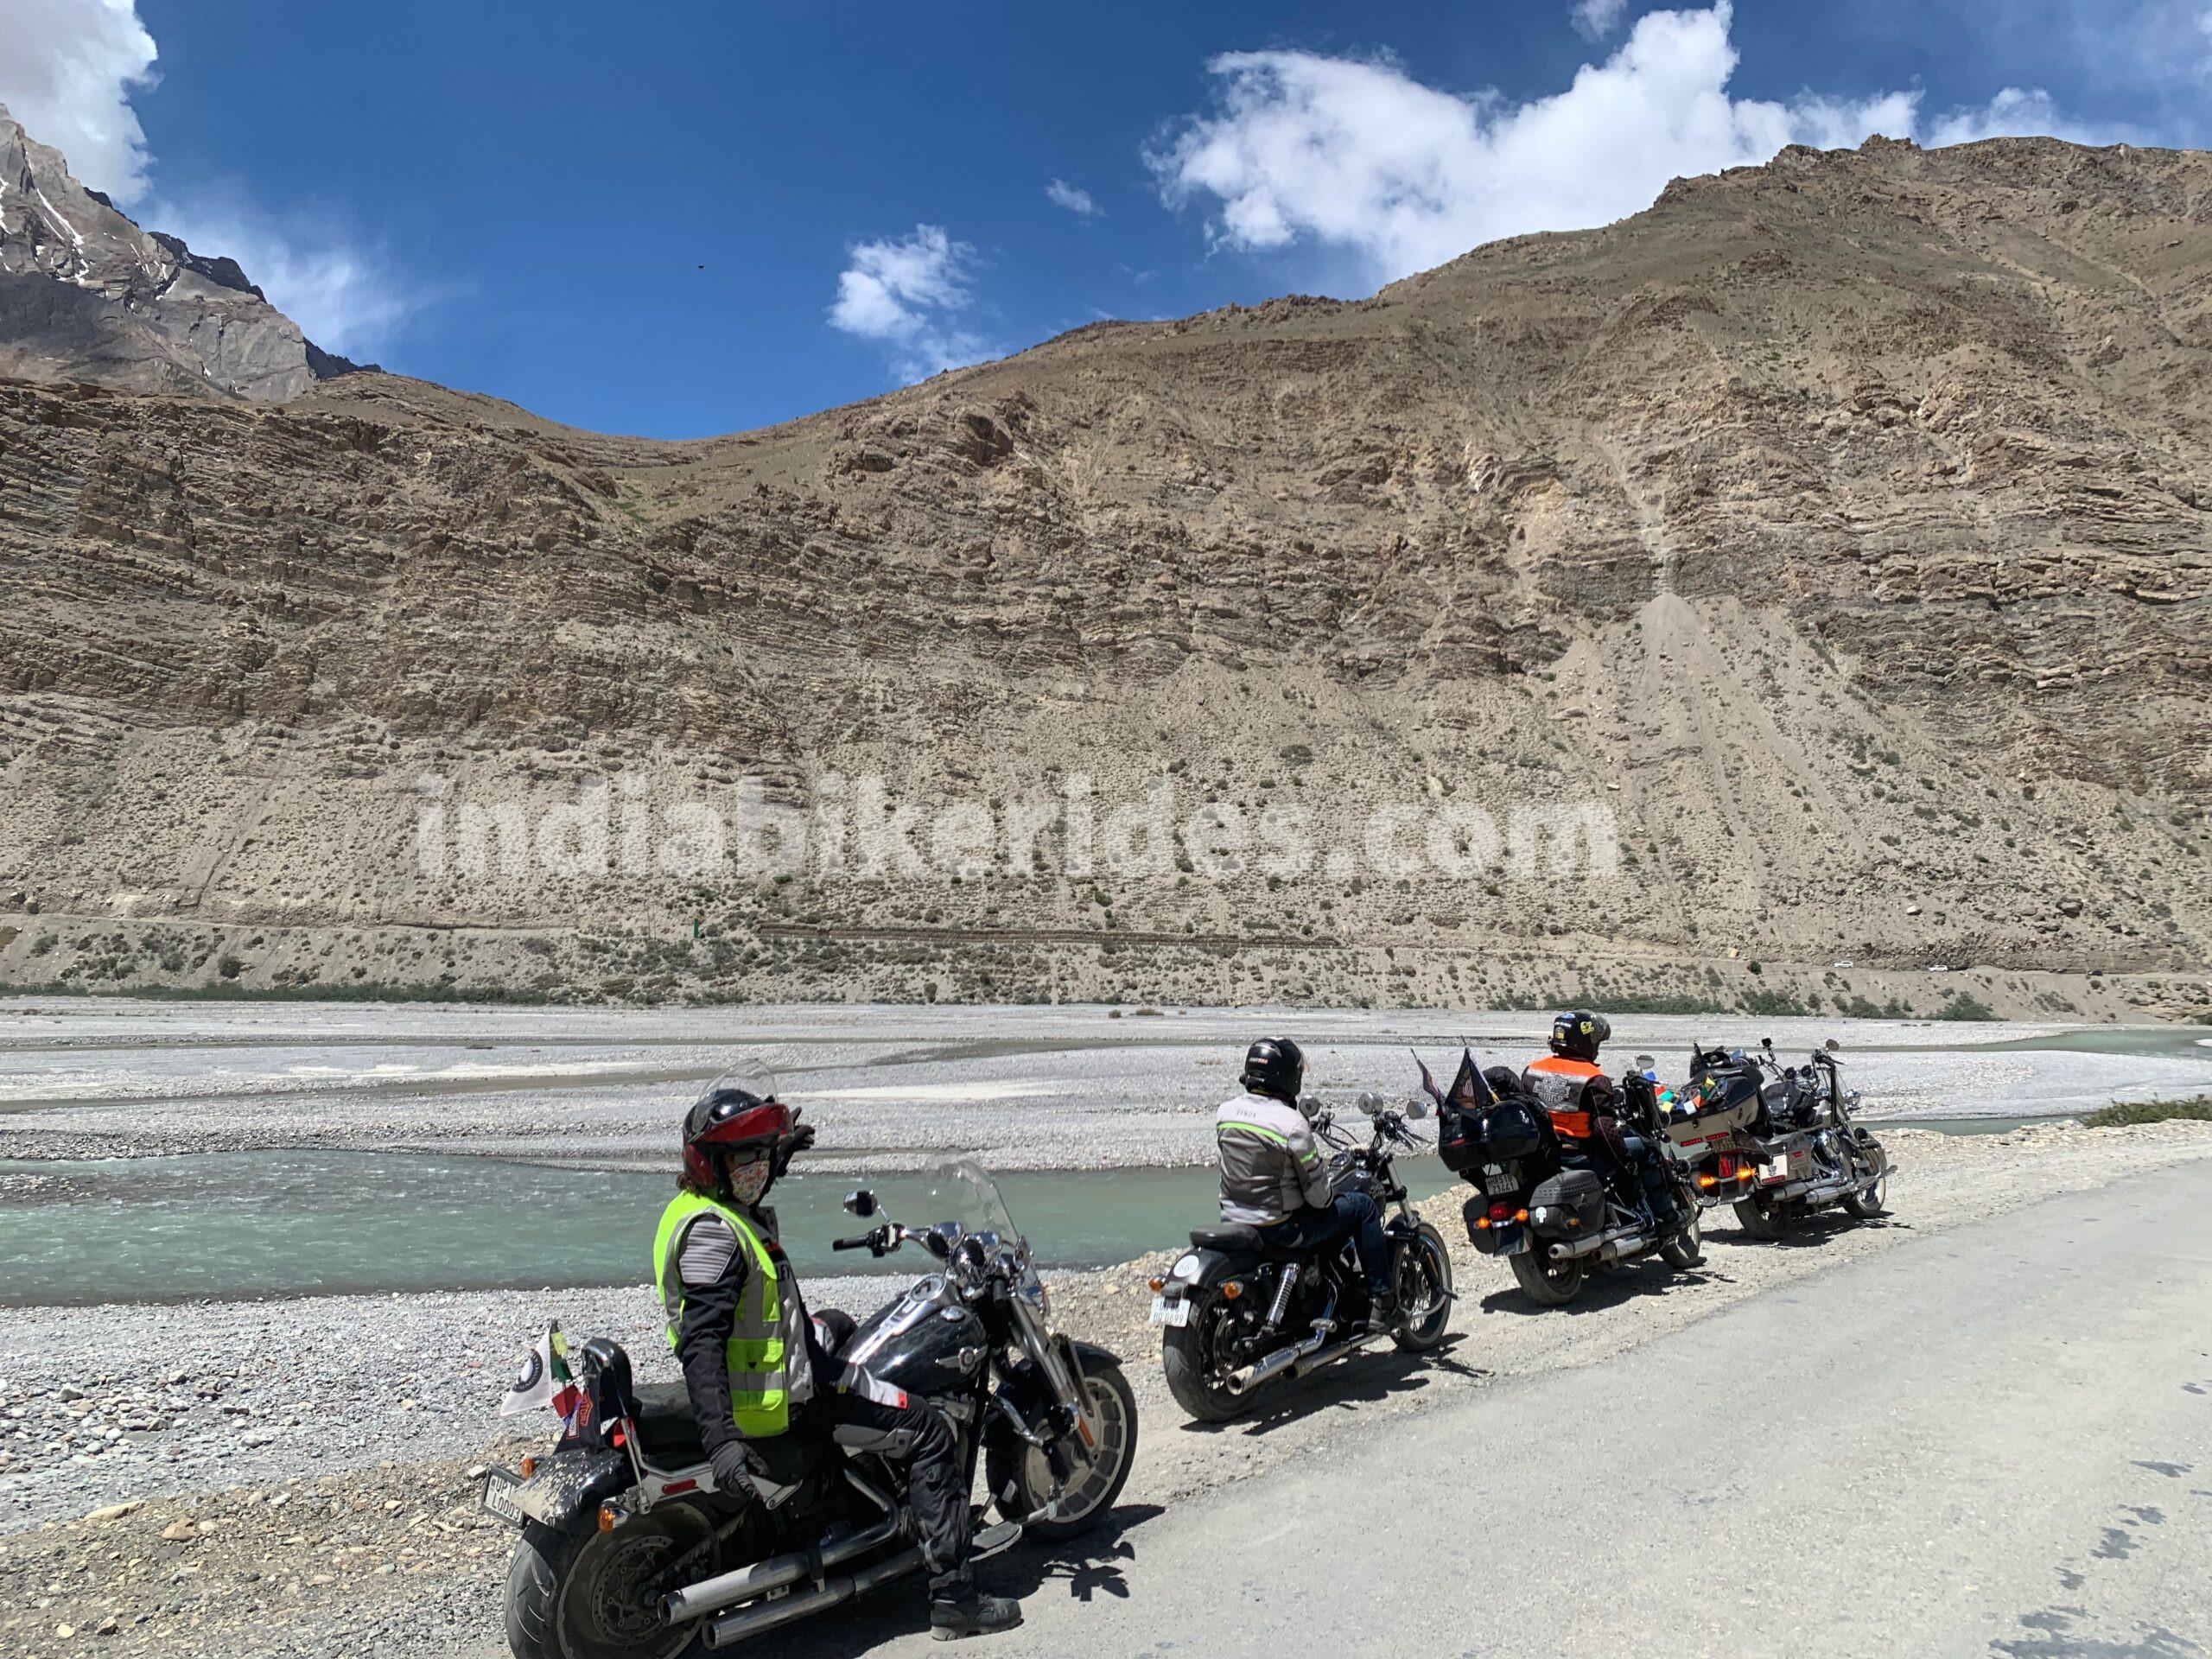 Harley Davidson, Spiti valley, India Bike rides